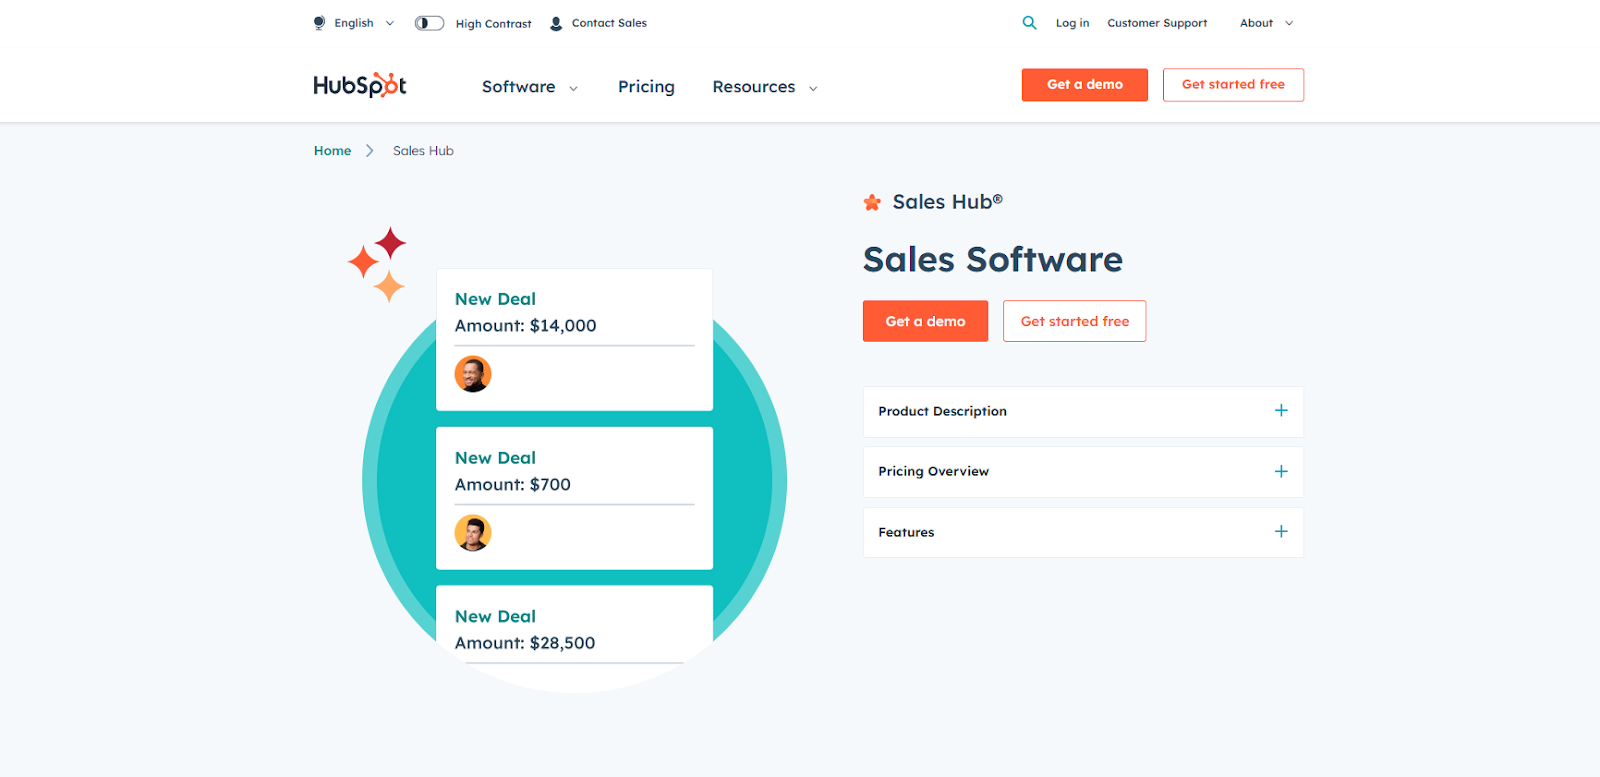 hubspot sales software